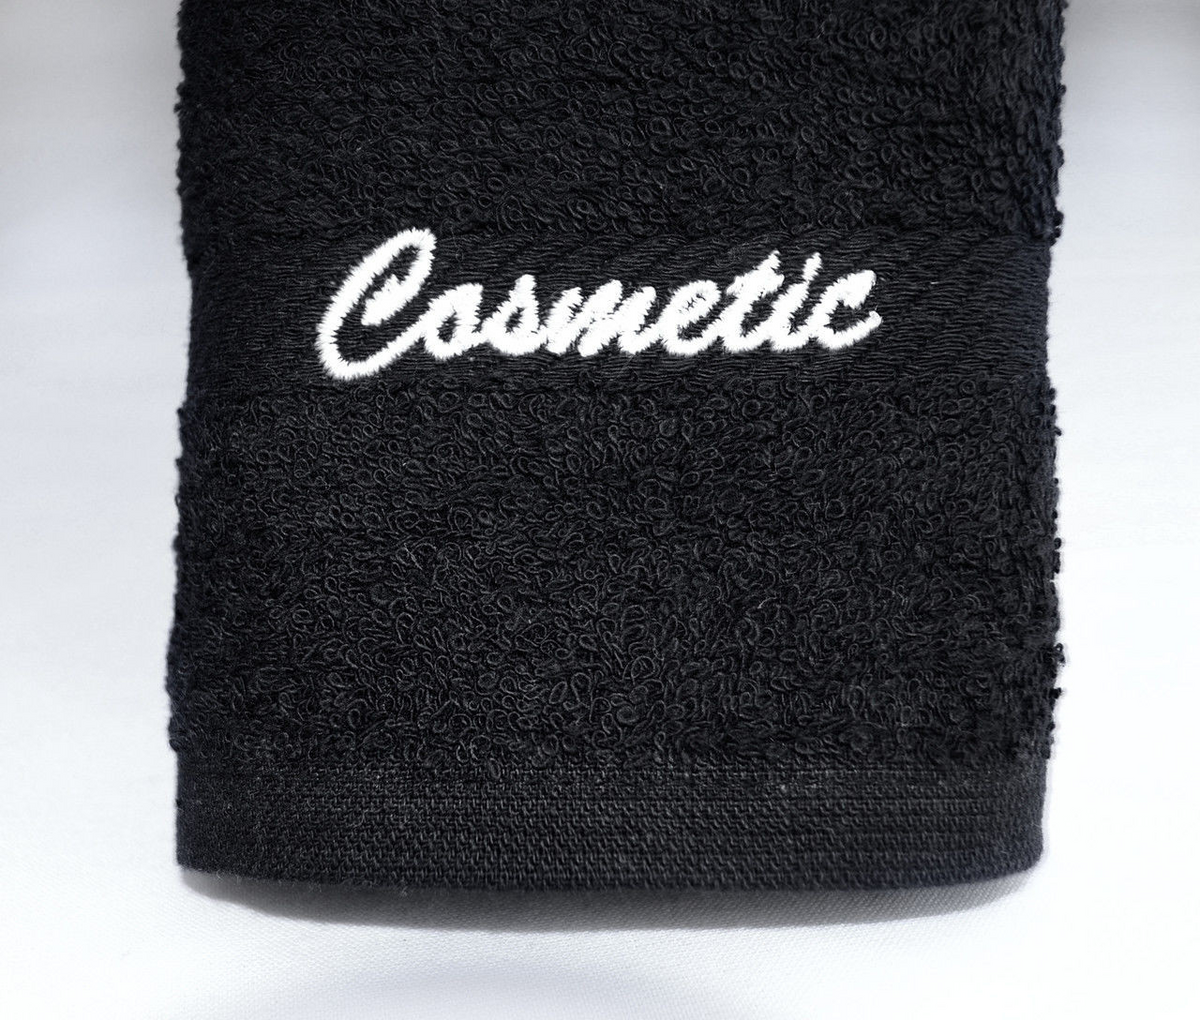 Washcloth - Cosmetic Towel